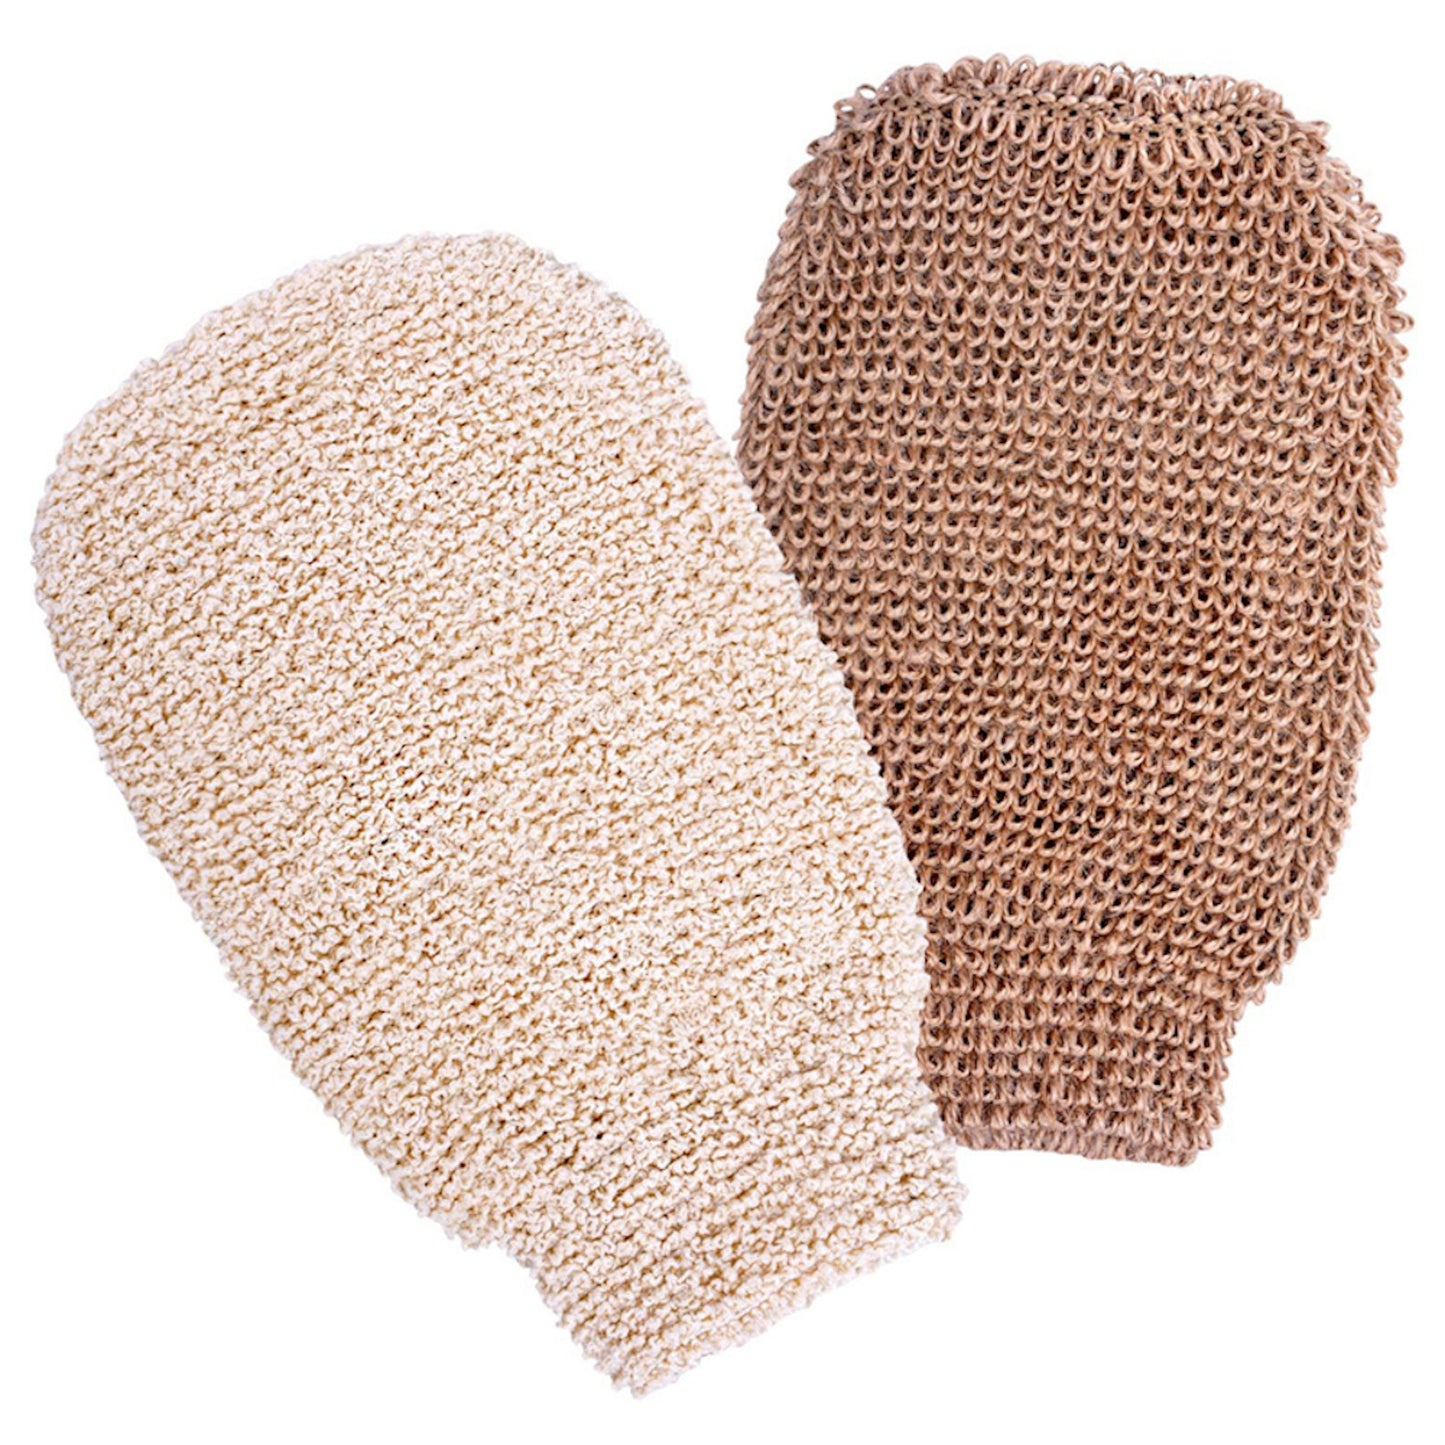 Exfoliating Body Scrubbing Gloves 100% Natural Plant Based Bathing Accessories 9.99 Indigo Paisley